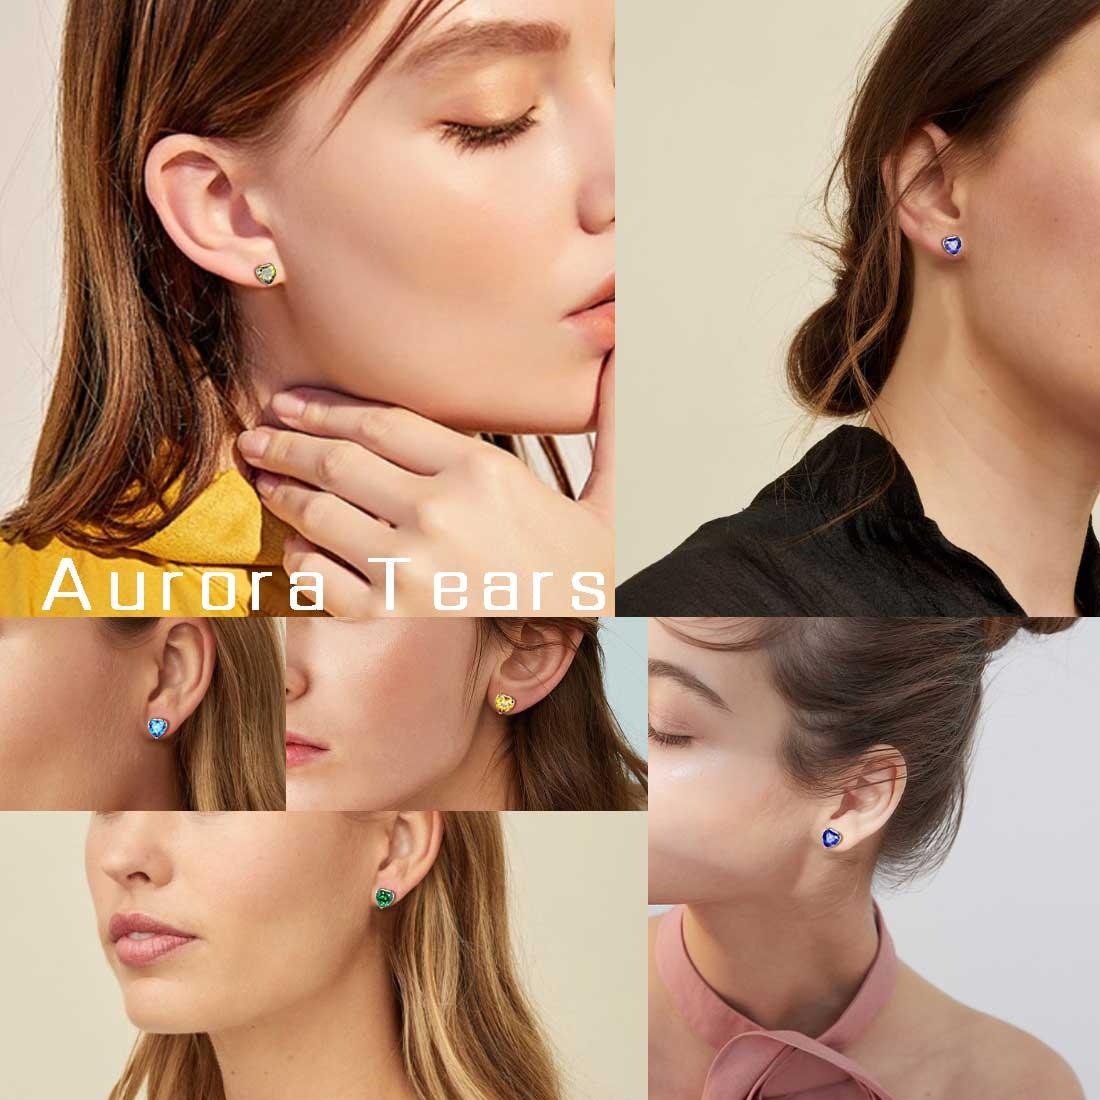 33/30 Pairs Hypoallergenic Earrings for Girls Sensitive Ears with Stainless Steel Post -Assorted Cute Stud Earrings for Teens Girls Women, Girl's